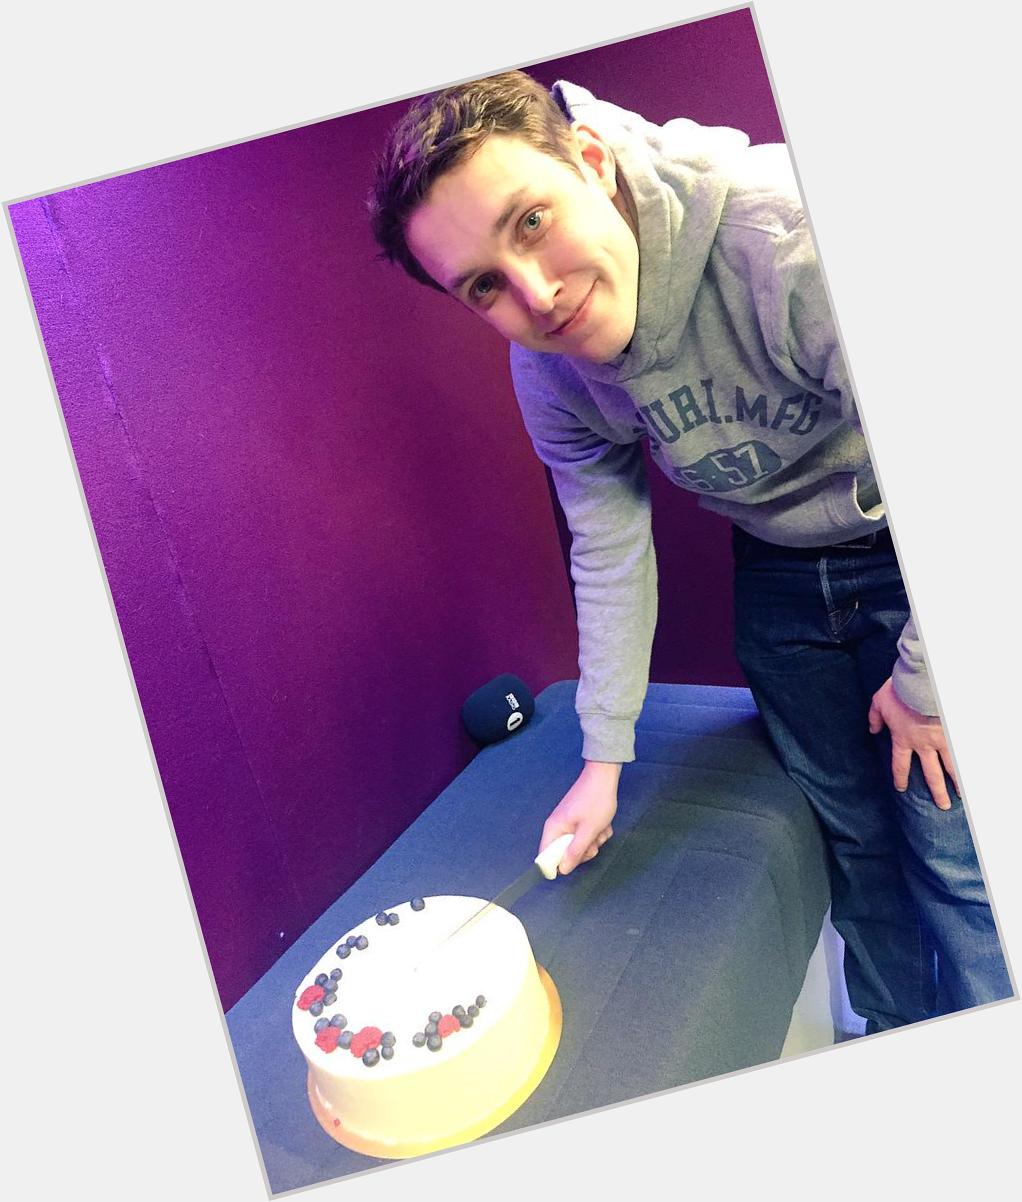   Also.. Bigup for the MASSIVE cake. Legend  happy birthday Chris!